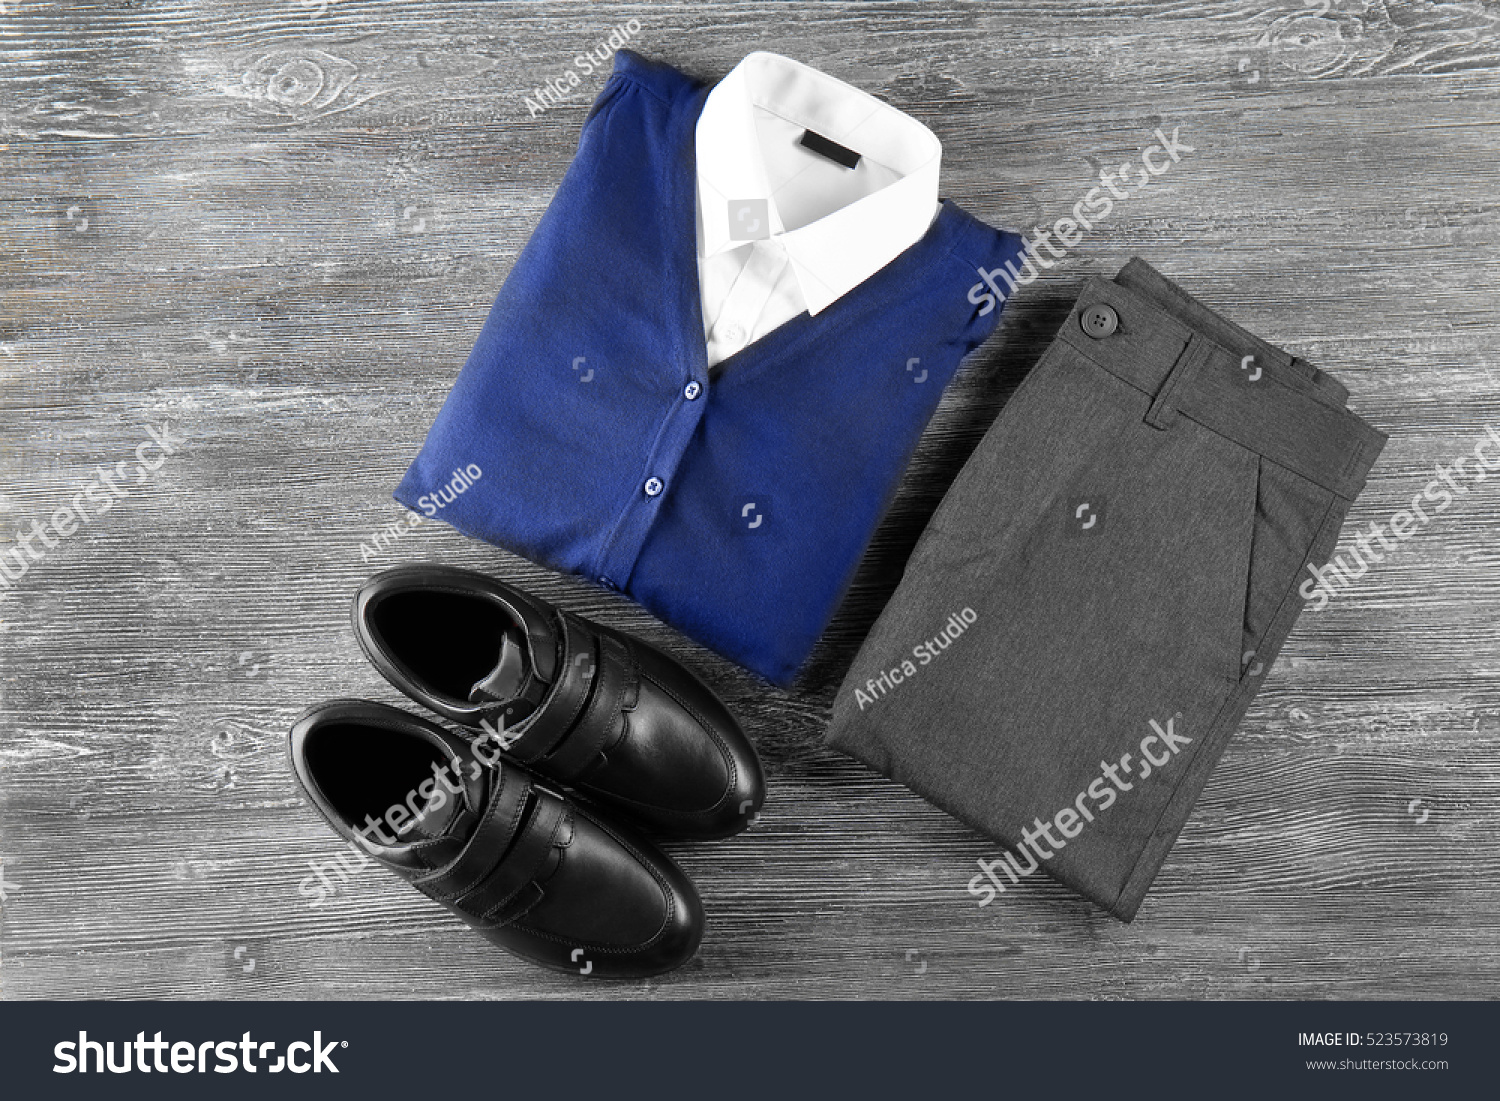 School Uniform On Wooden Background Stock Photo 523573819 - Shutterstock